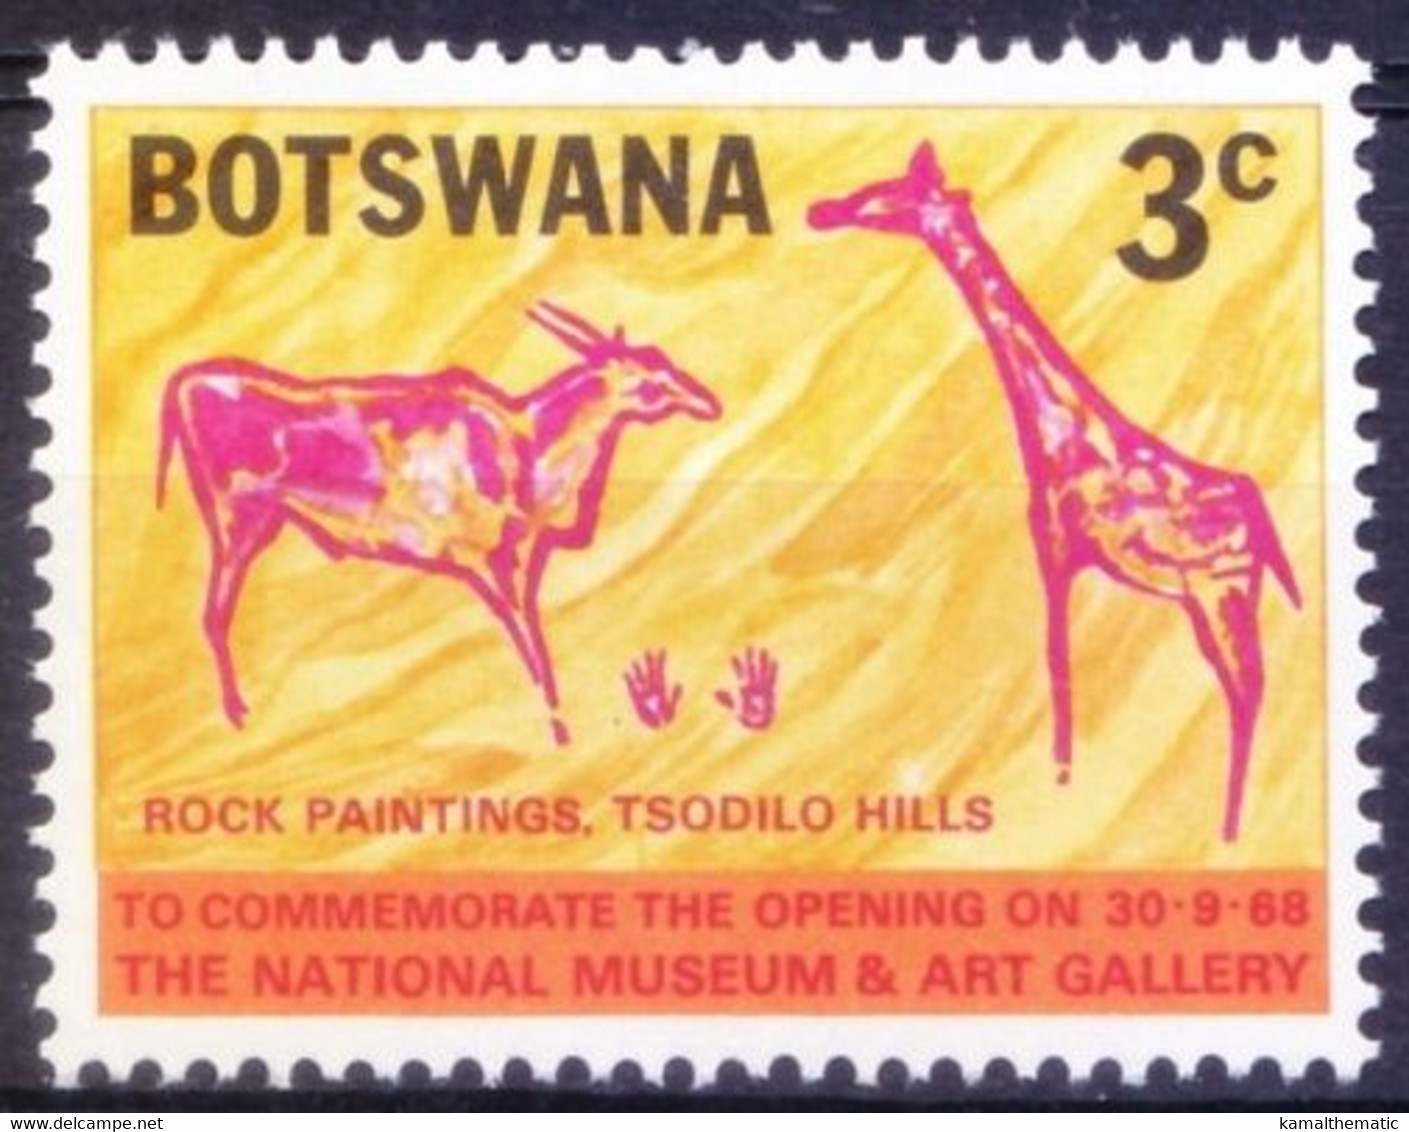 Botswana 1968 MNH, Art, Cave Paintings, Rock Painting, Giraffe & Eland Animals - Engravings